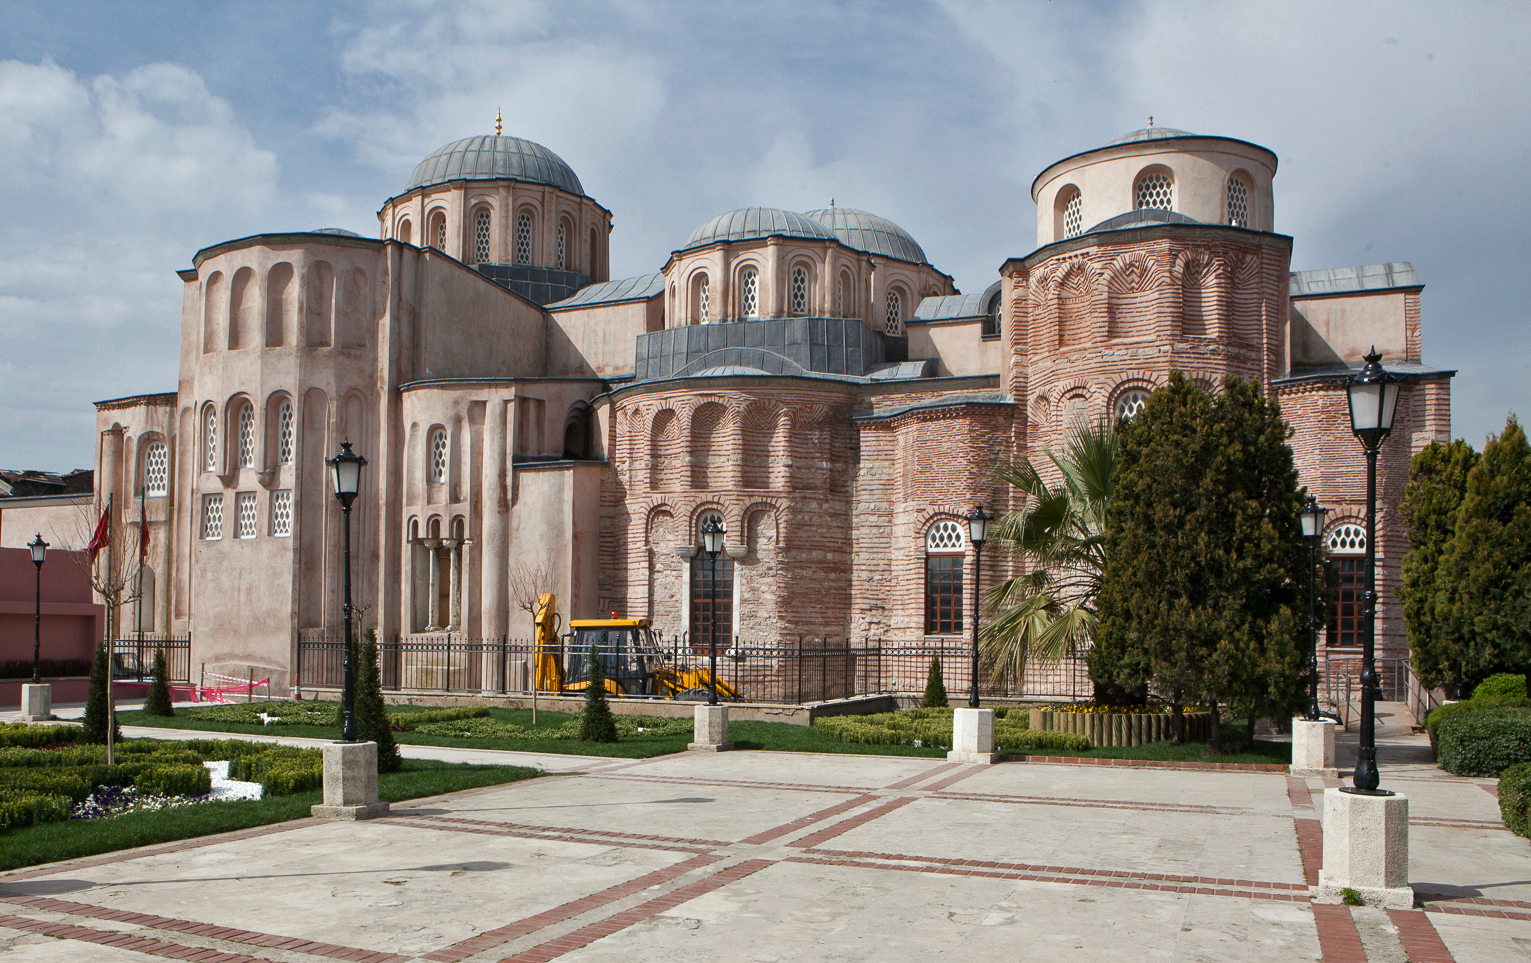 Byzantine architecture